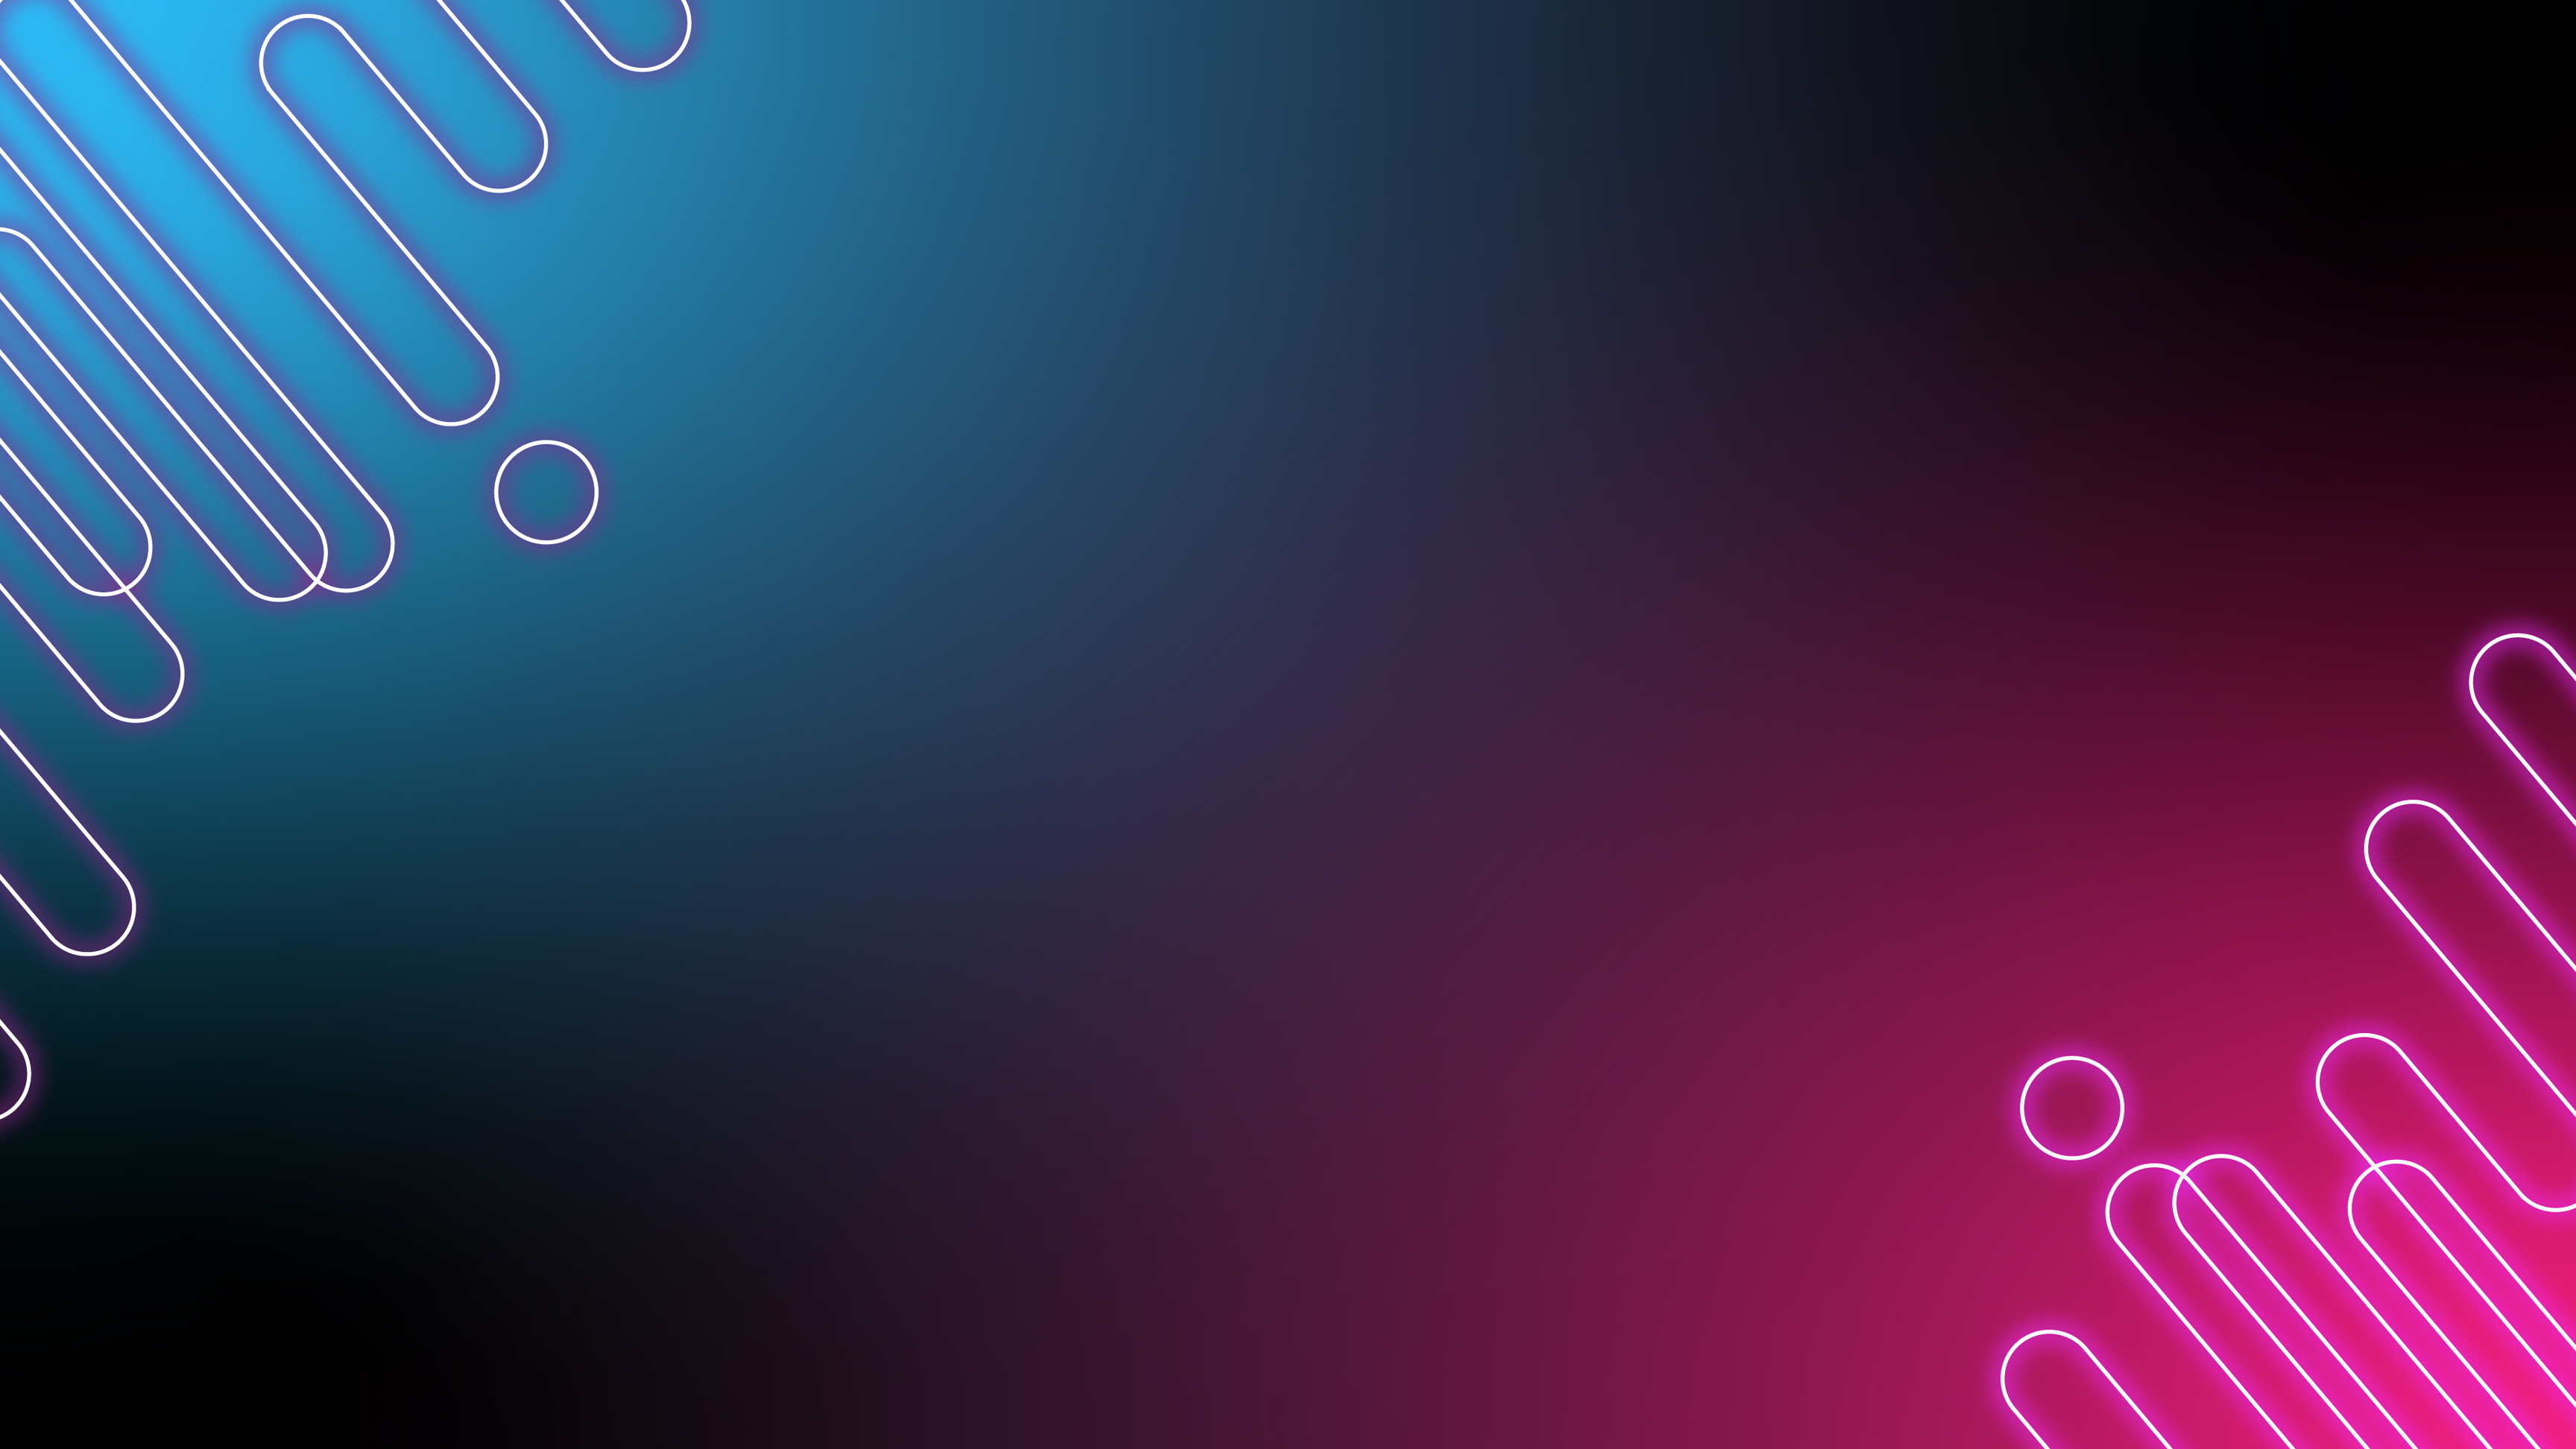 Neon Background 010